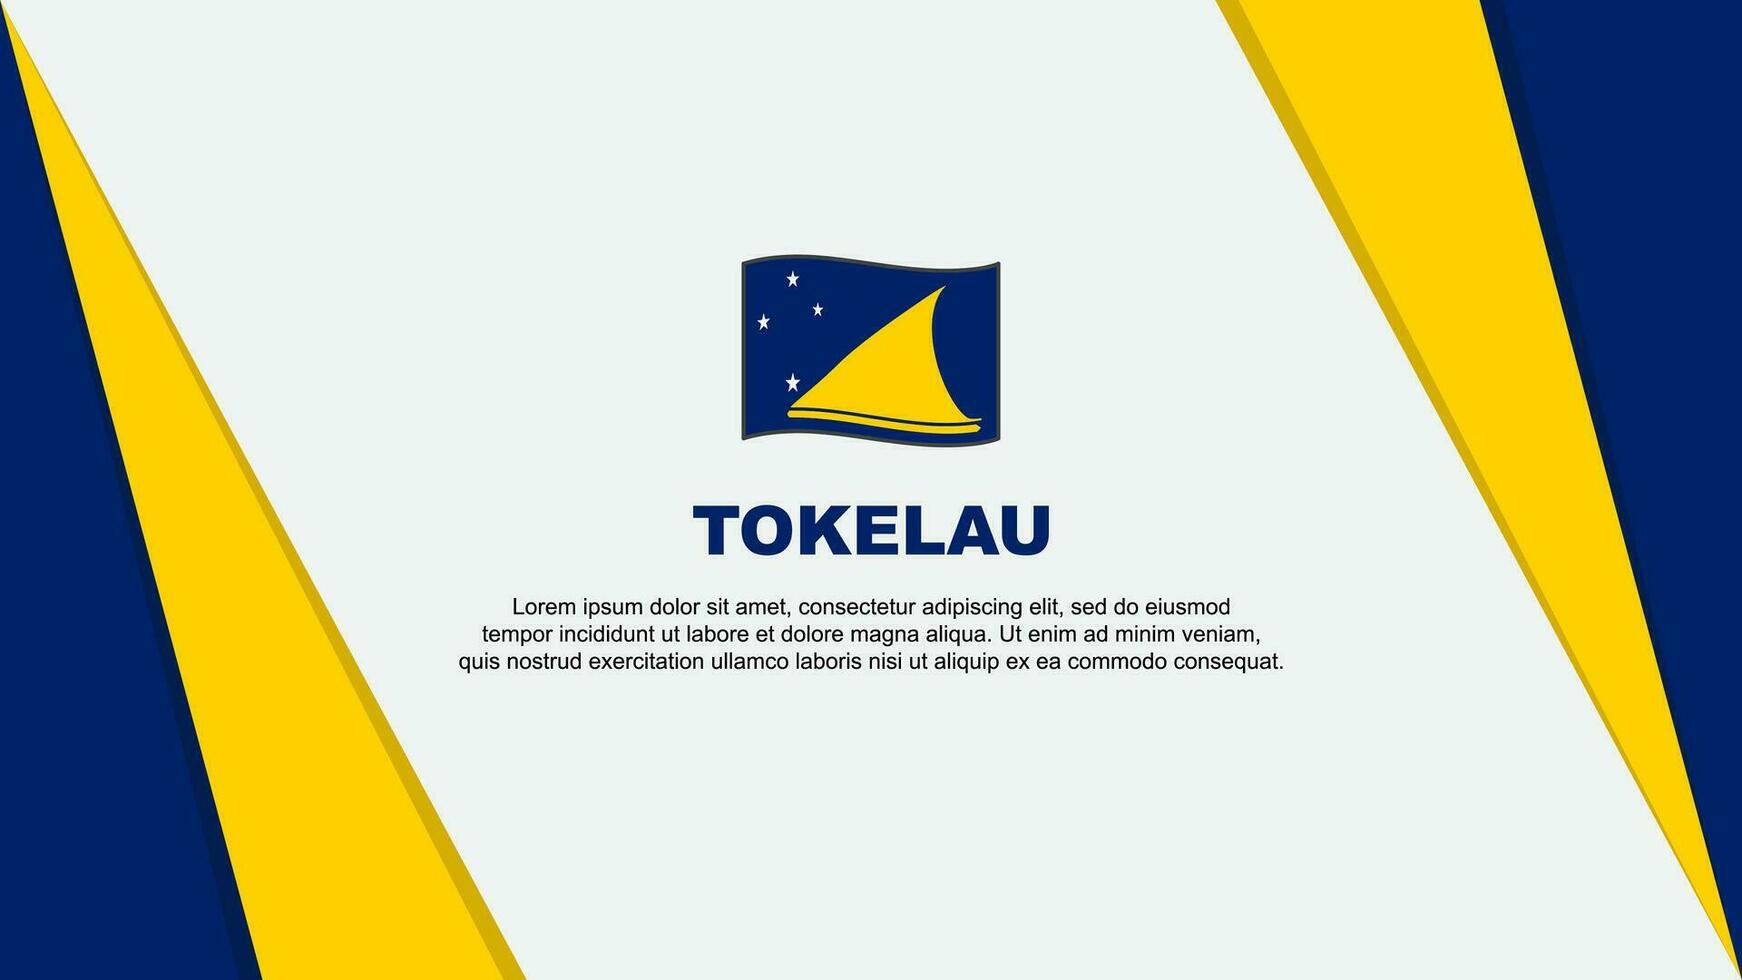 Tokelau Flag Abstract Background Design Template. Tokelau Independence Day Banner Cartoon Vector Illustration. Tokelau Flag